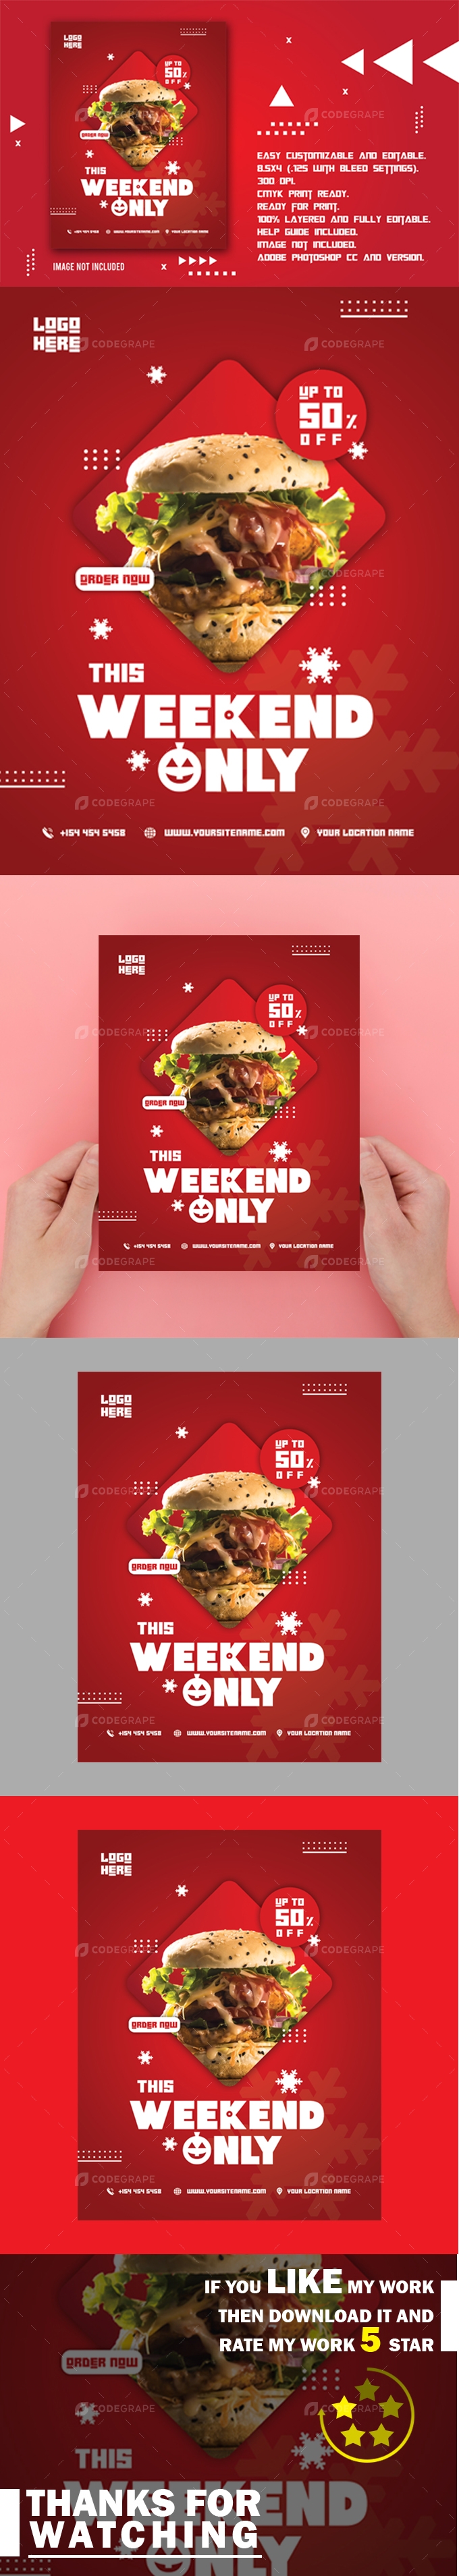 Weekend Sale Food Promotional Flyer